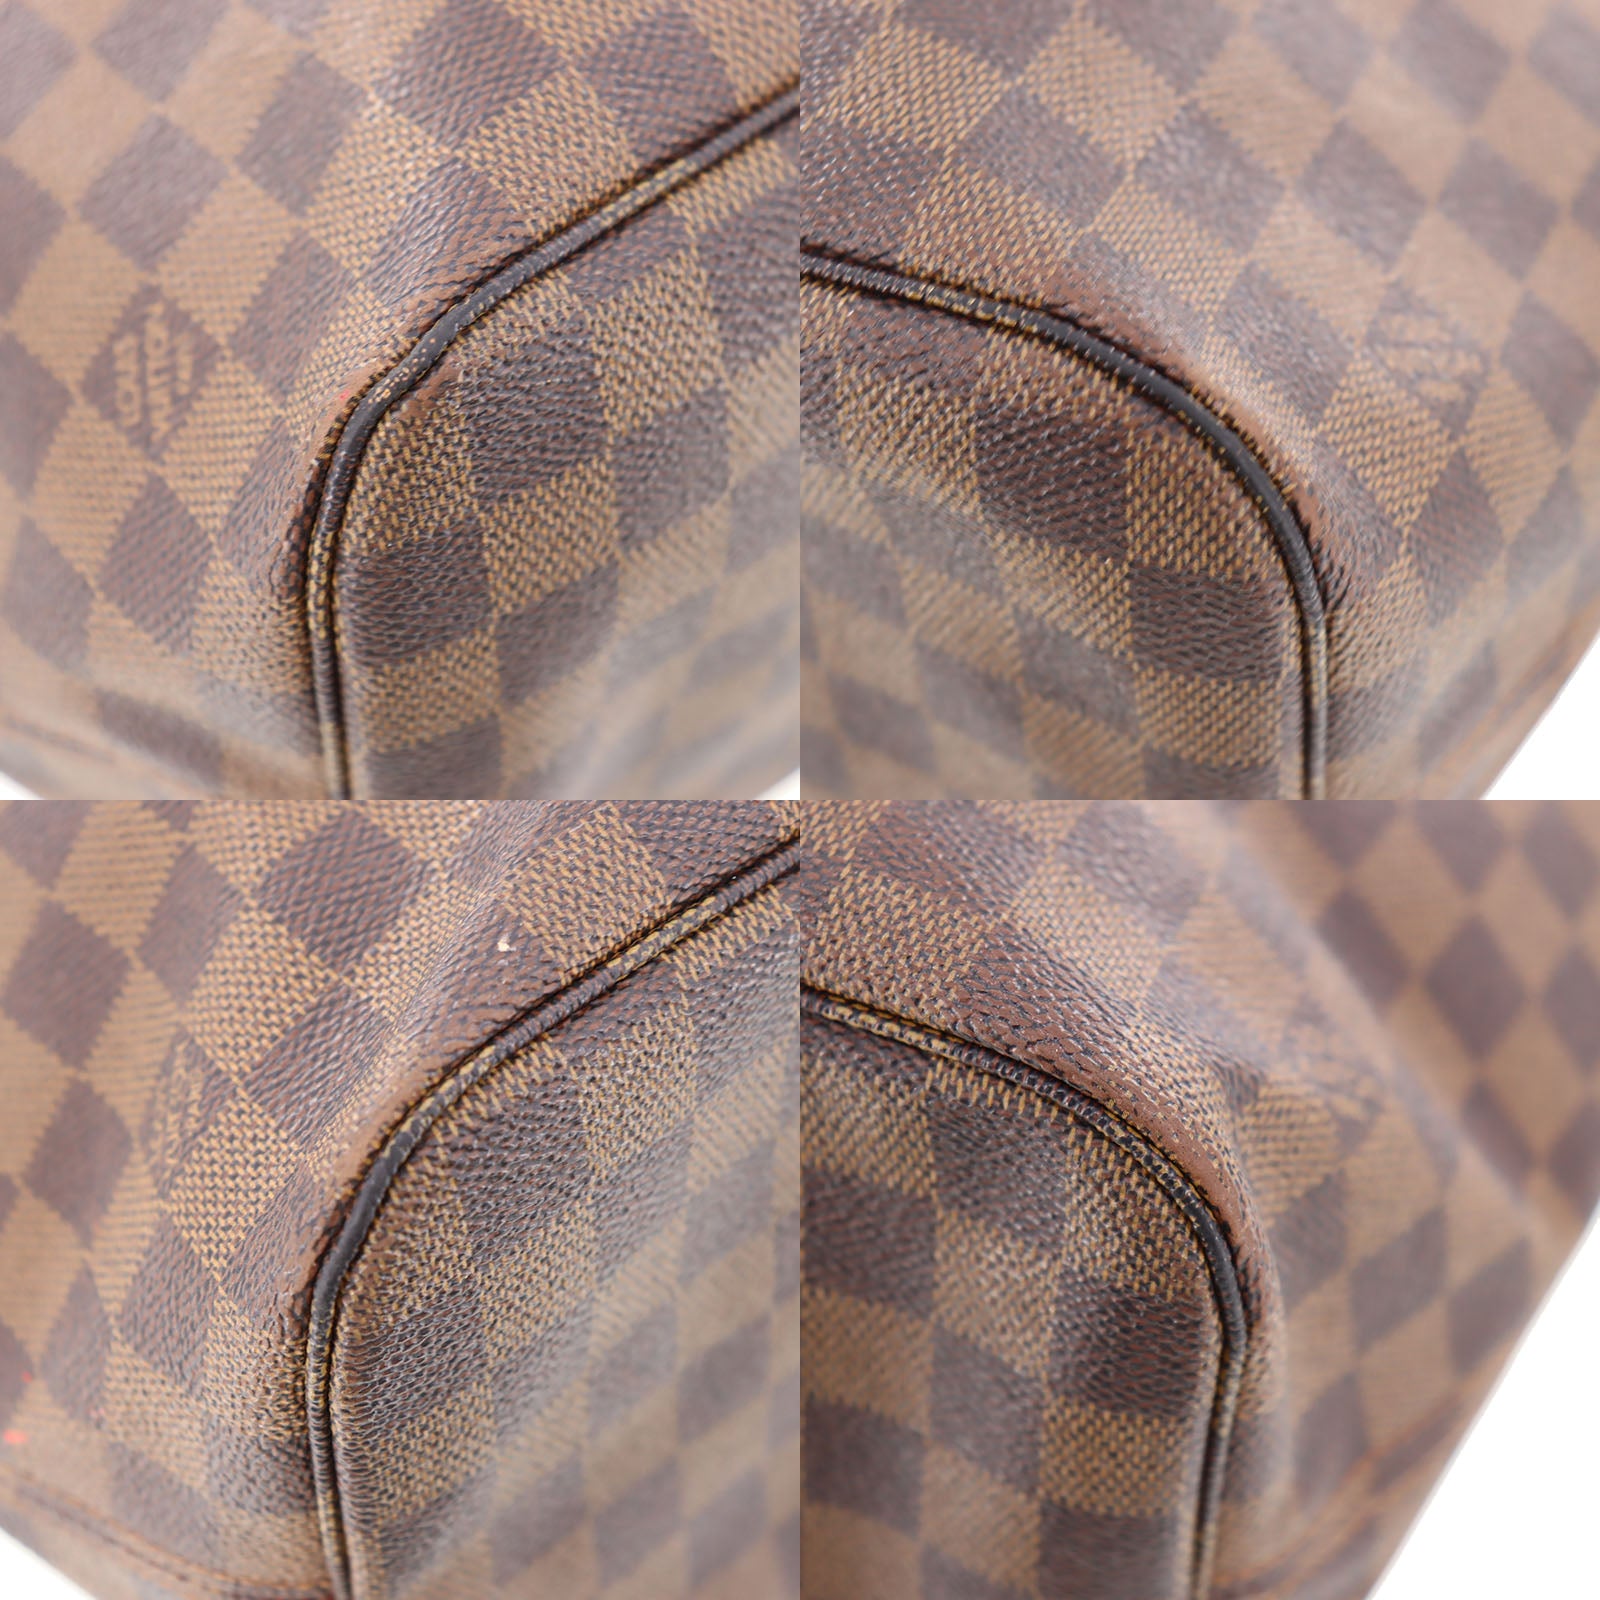 Louis Vuitton Damier Neverfull MM N41358 Brown Canvas Tote Bag